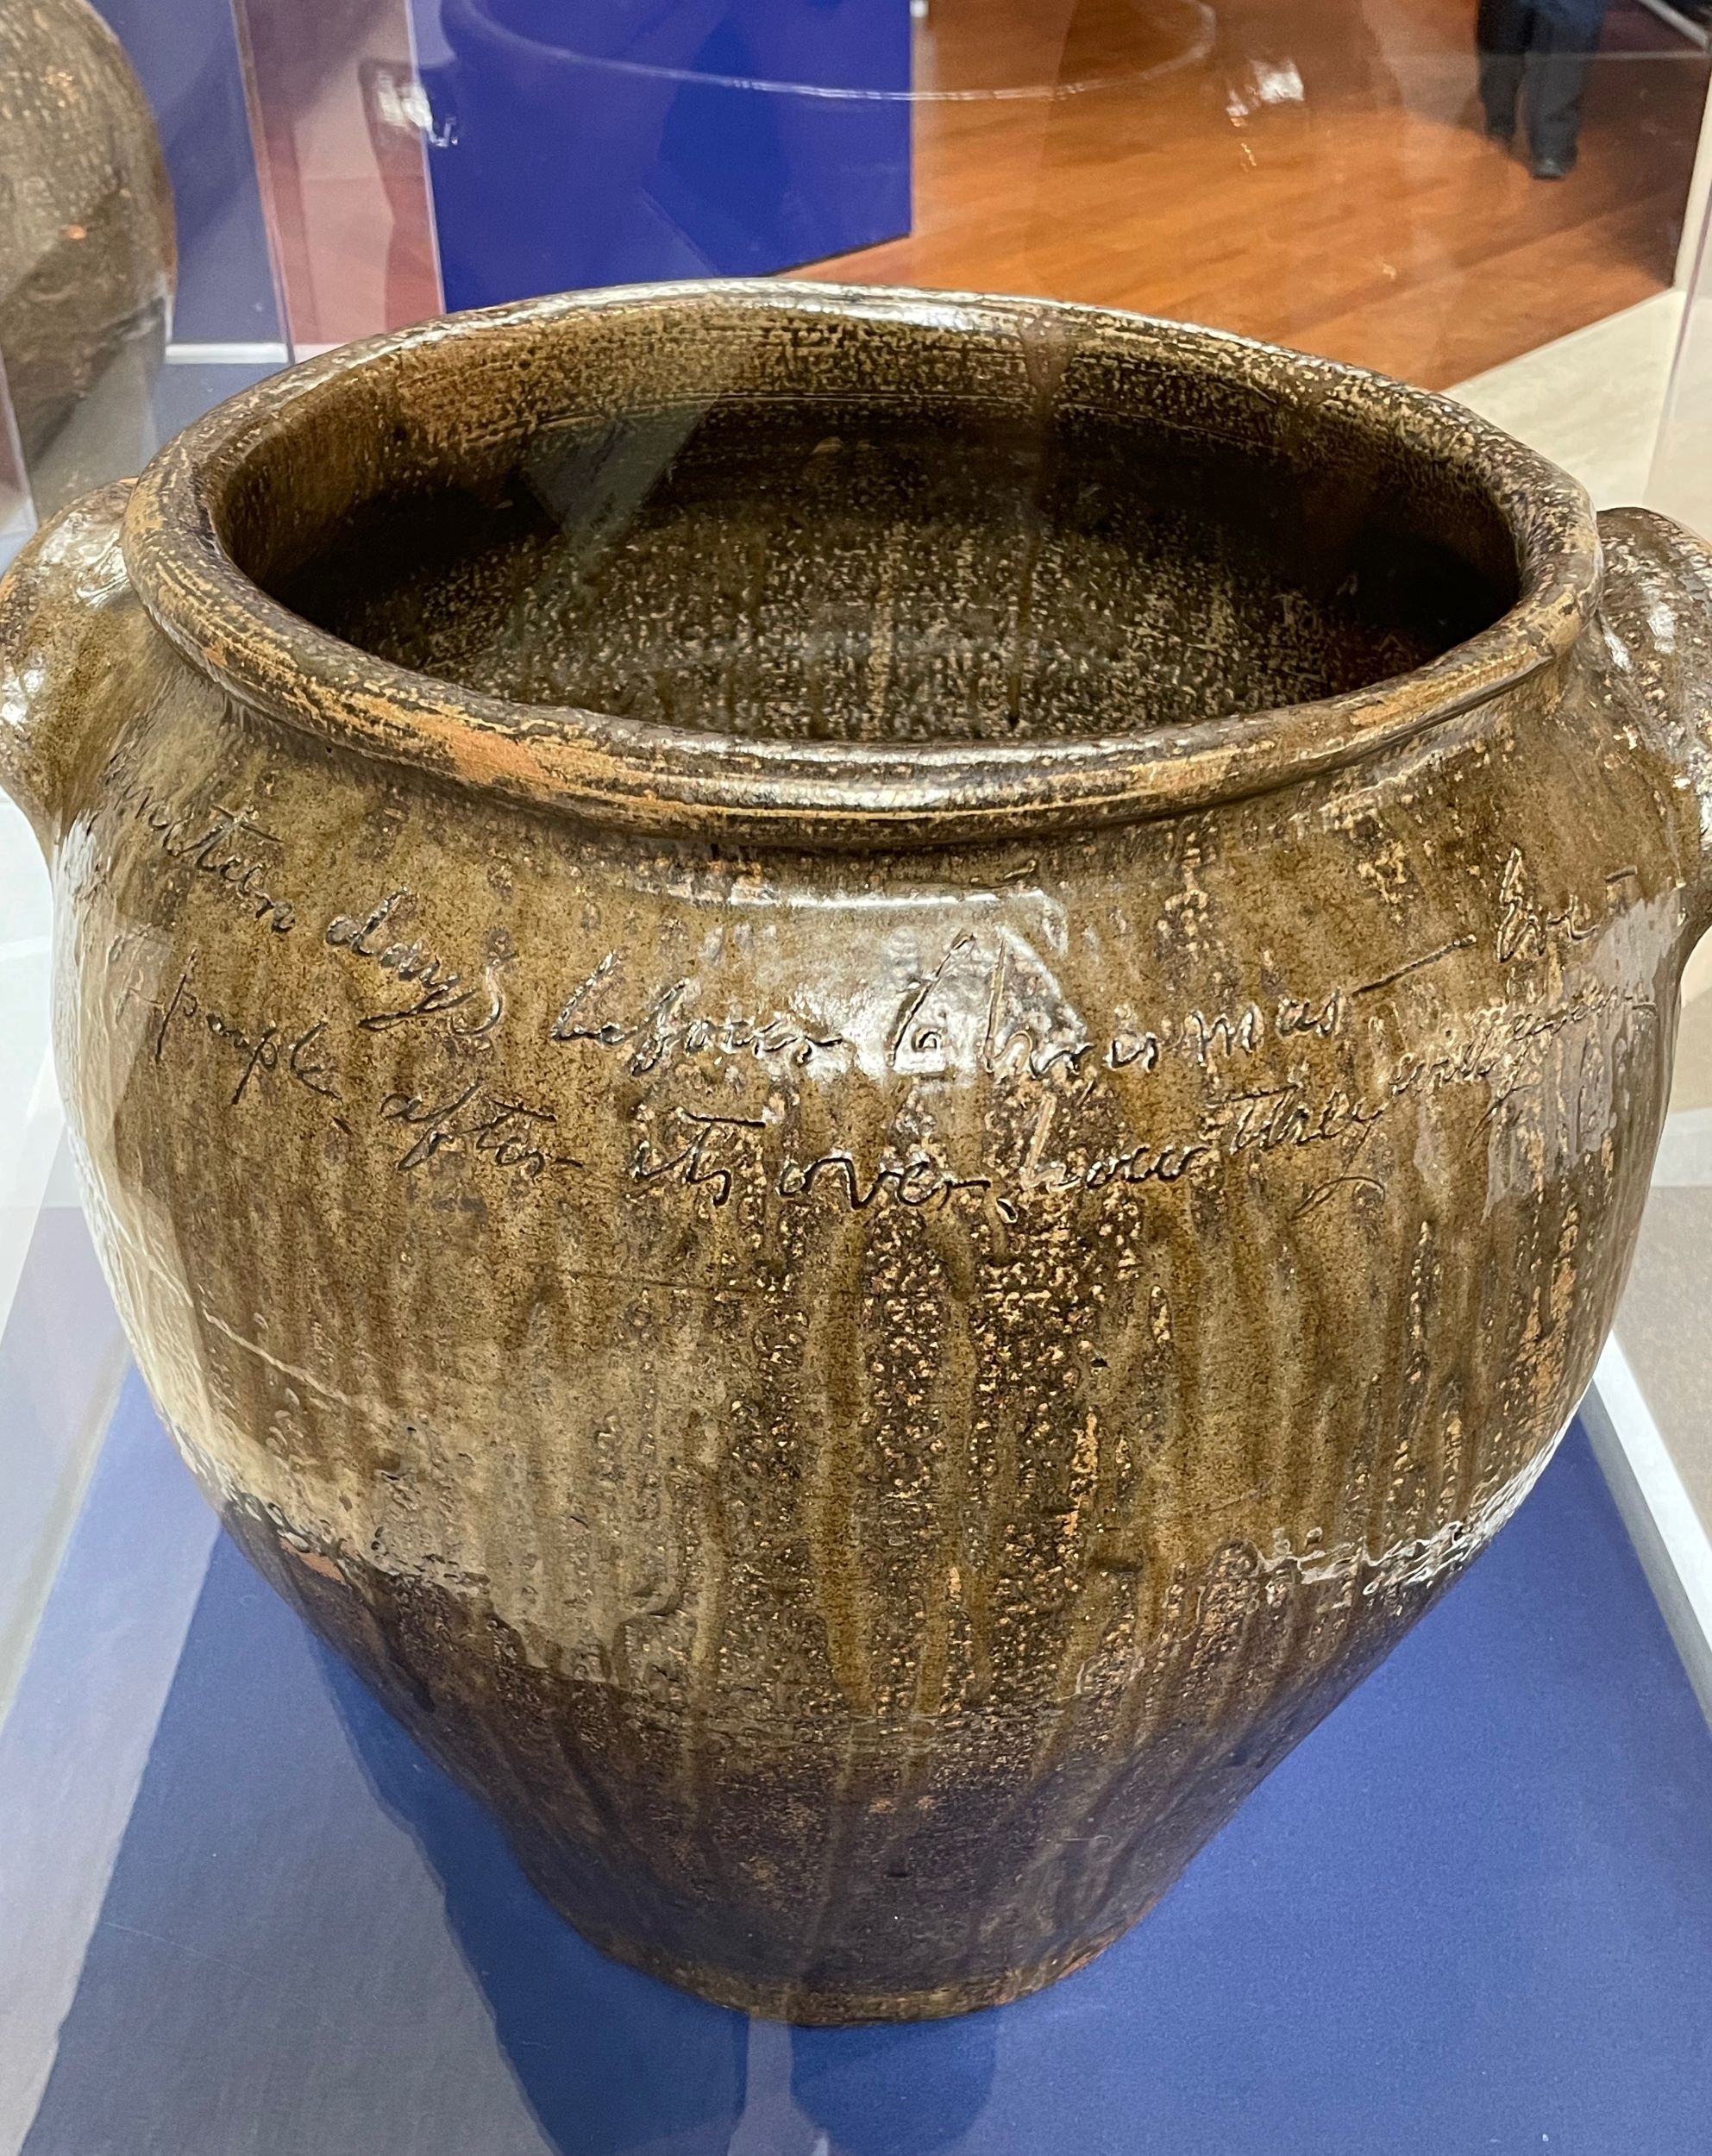 Large ceramic jug with a shiny, uneven brown glaze. A largely illegible script inscription runs under the rim.